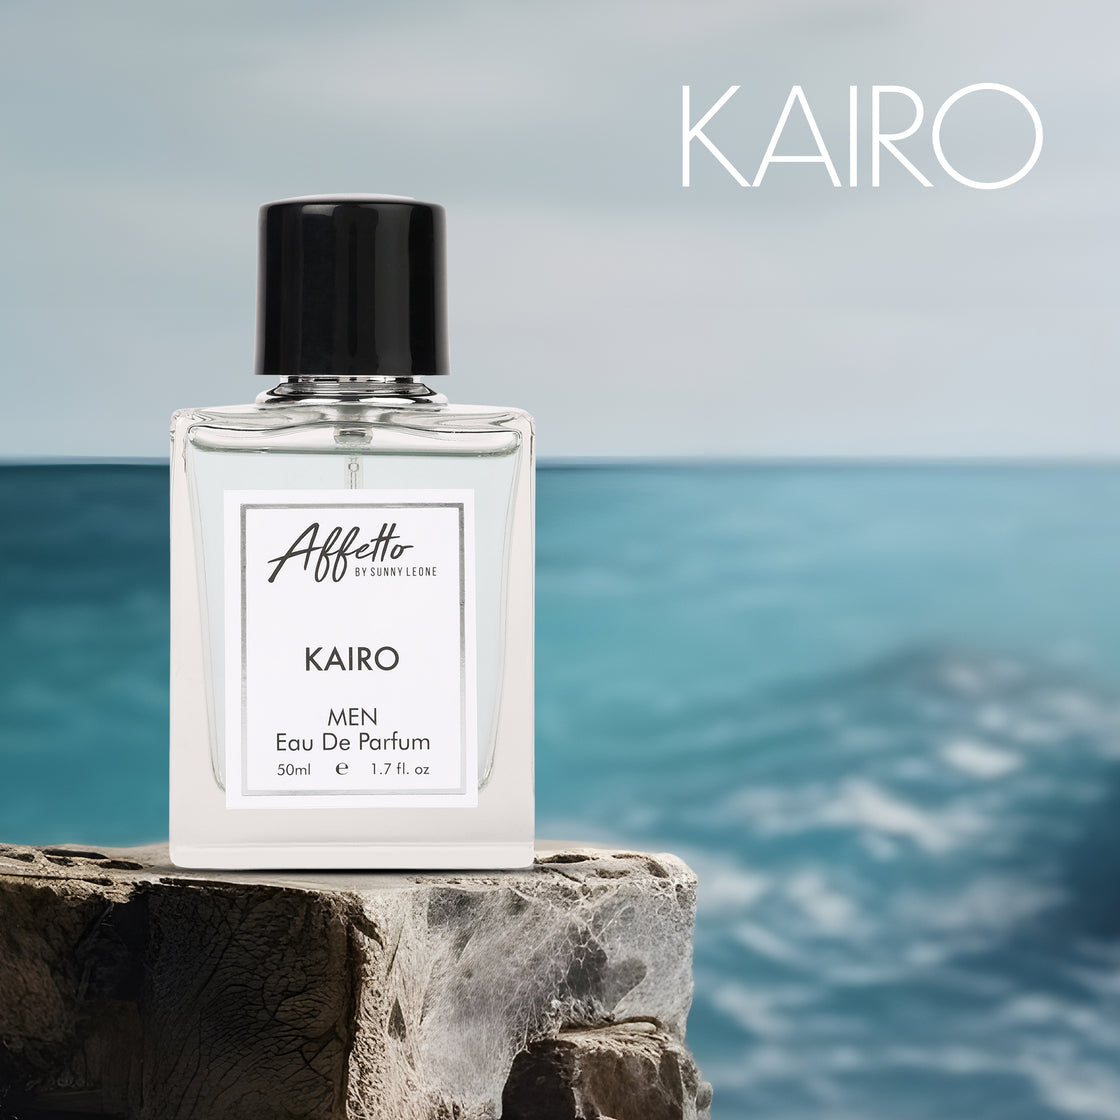 kairo - For Him (50ml)-cruelty free cosmetics-Sunny Leone